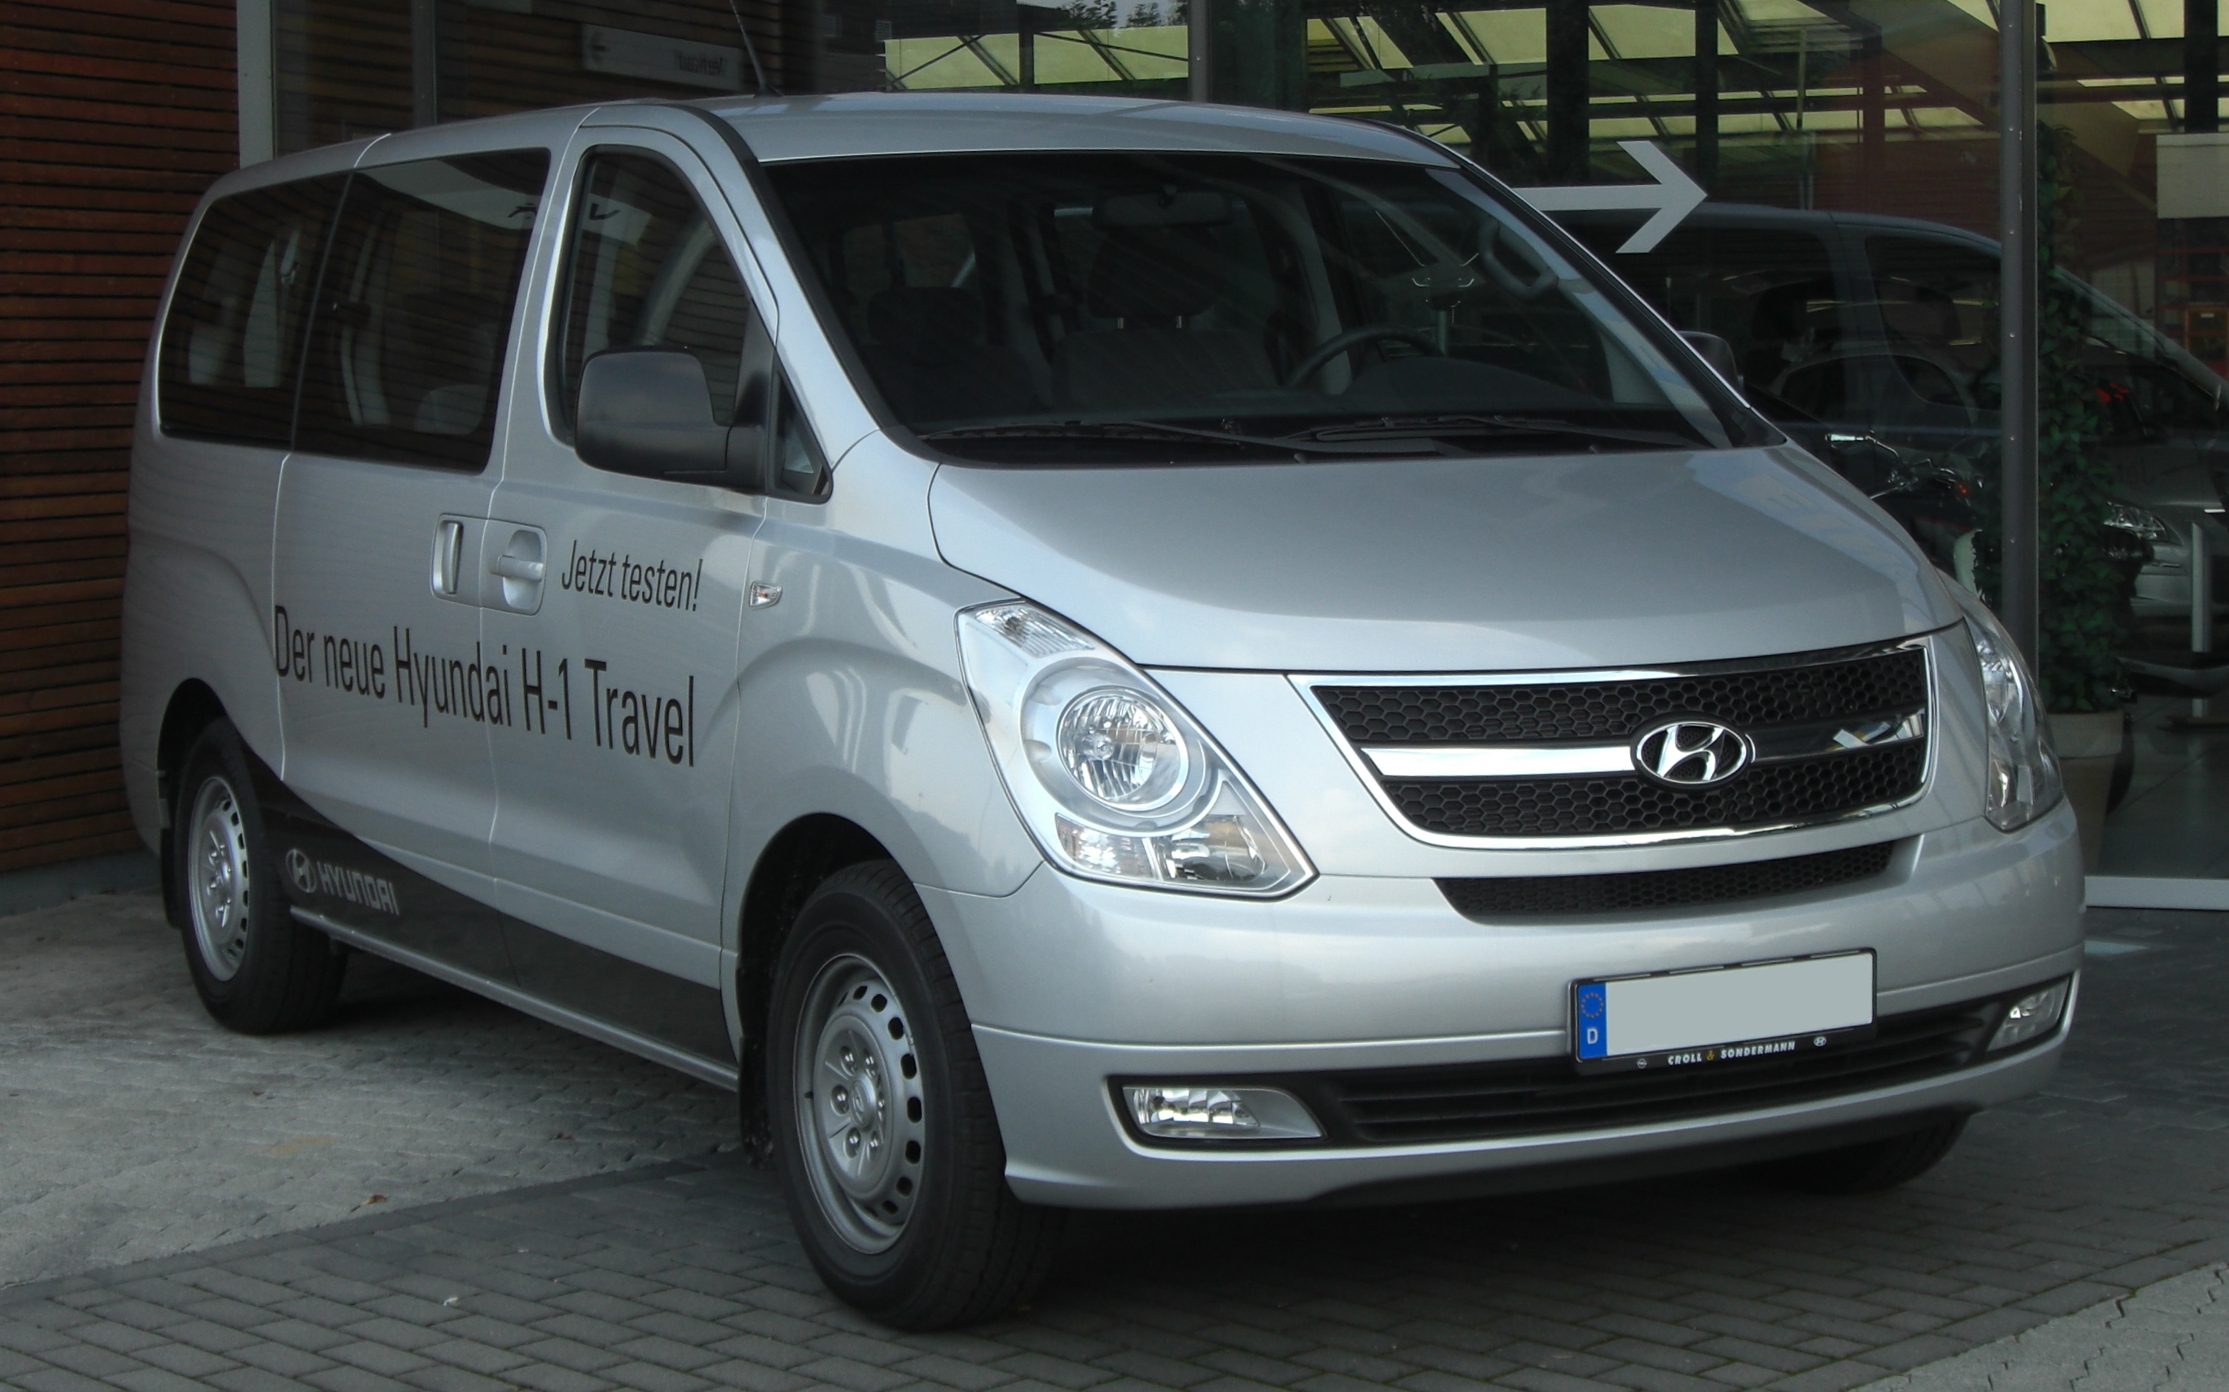 Hyundai H1 Travel technical details, history, photos on Better Parts LTD